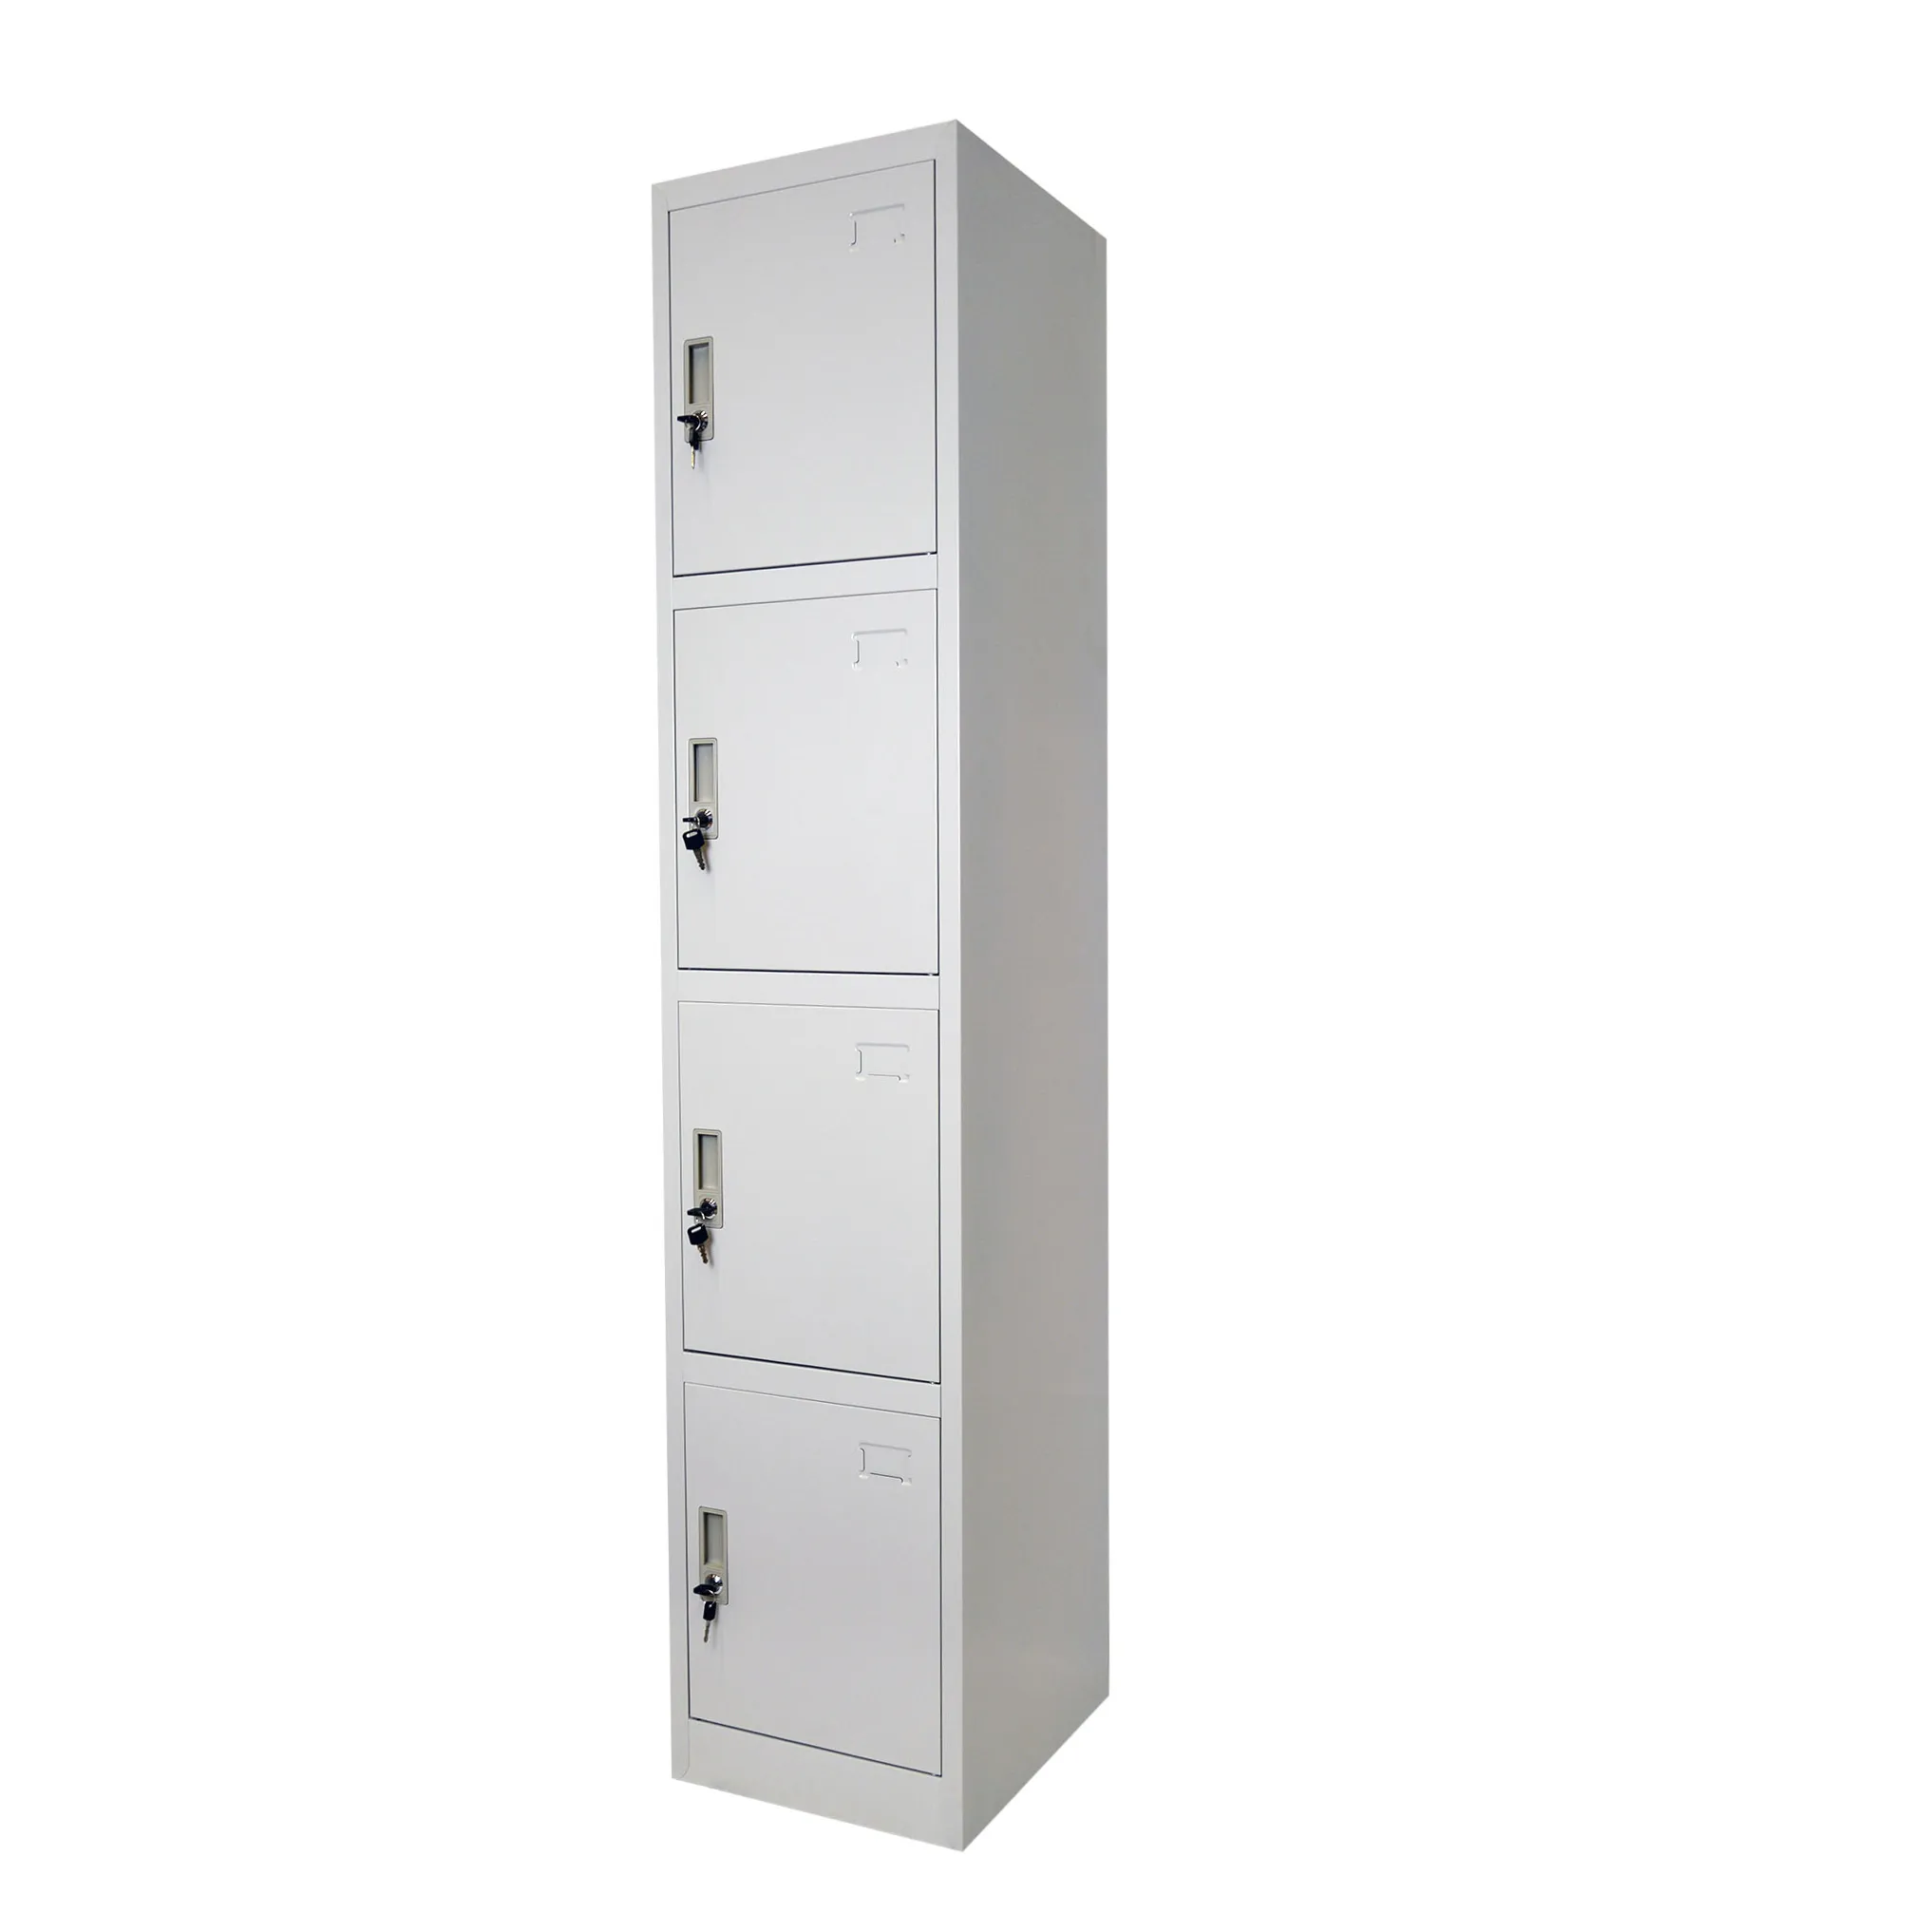 2020 Modern High Quality Single Row 4 Four Doors Locker Metal Iron Cupboard Customized Cabinet For School Gym